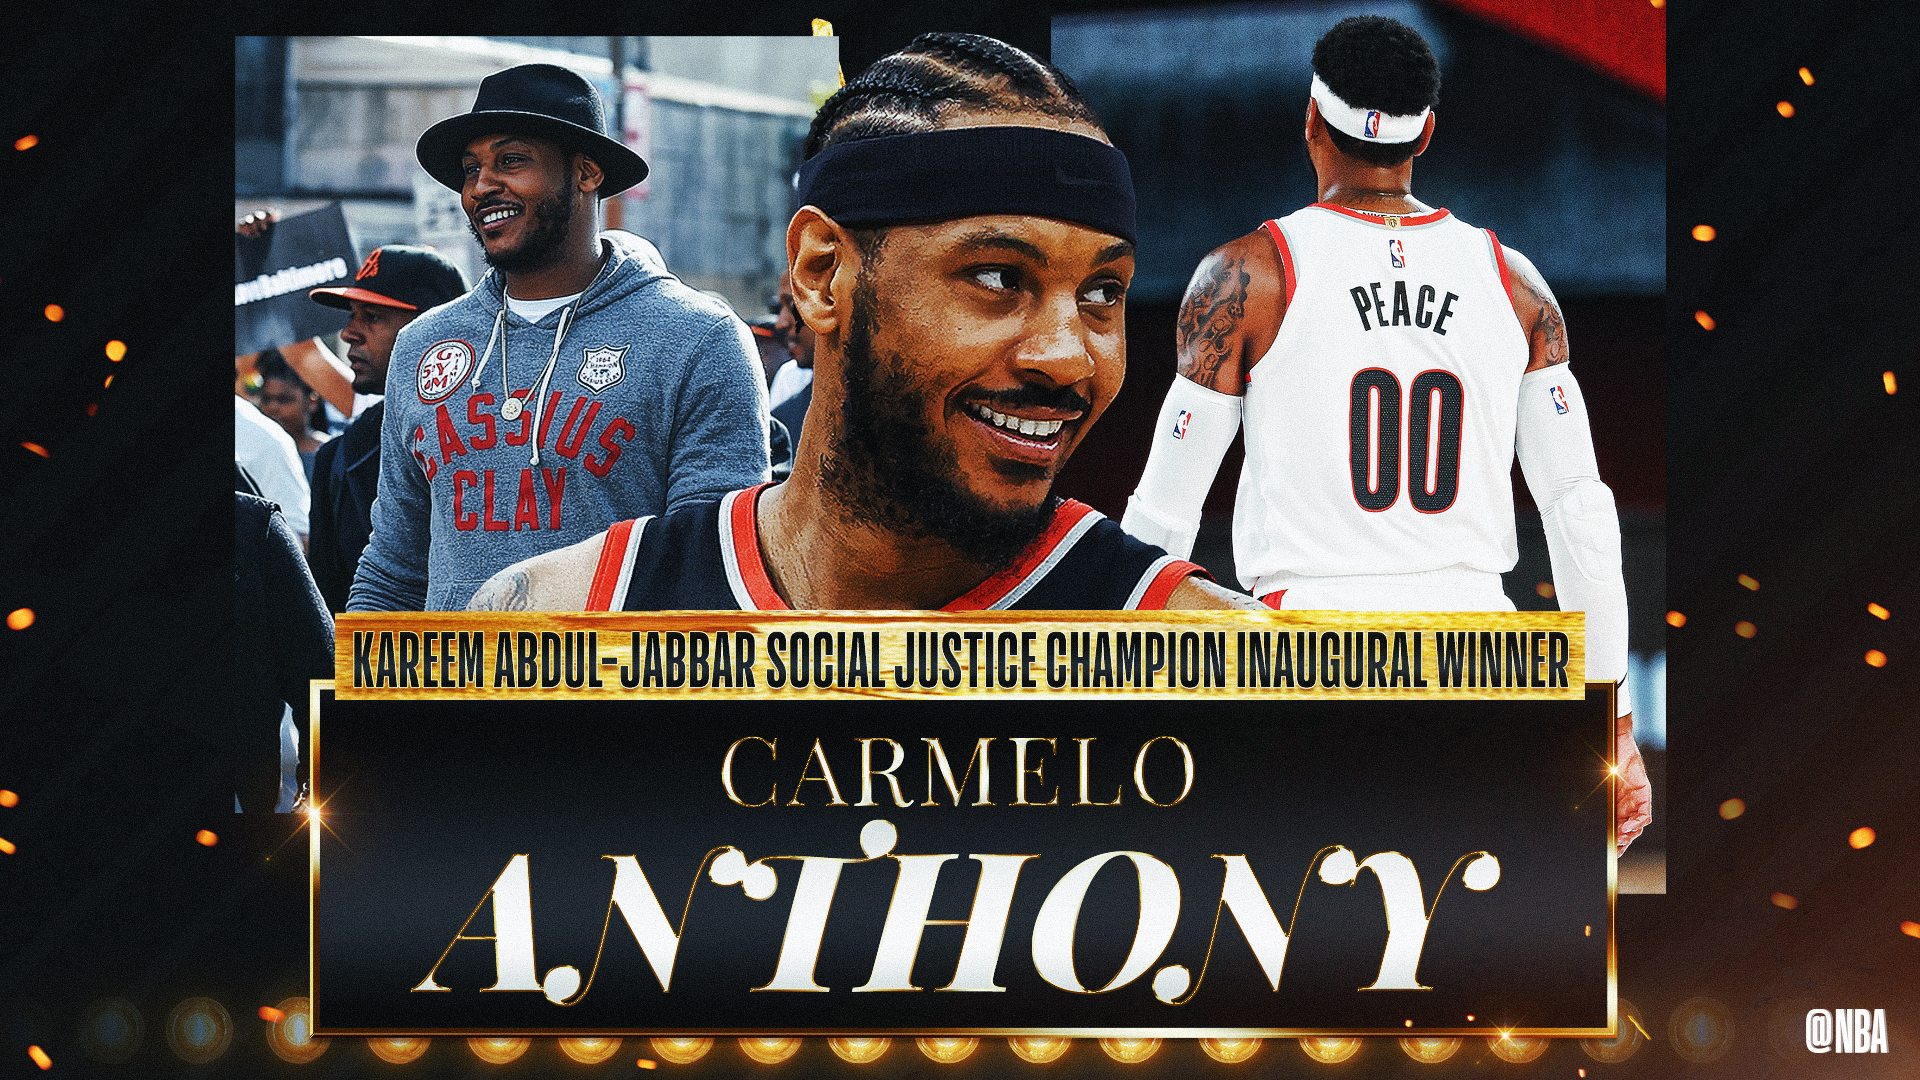 Carmelo Anthony named Kareem Abdul-Jabbar Social Justice Champion